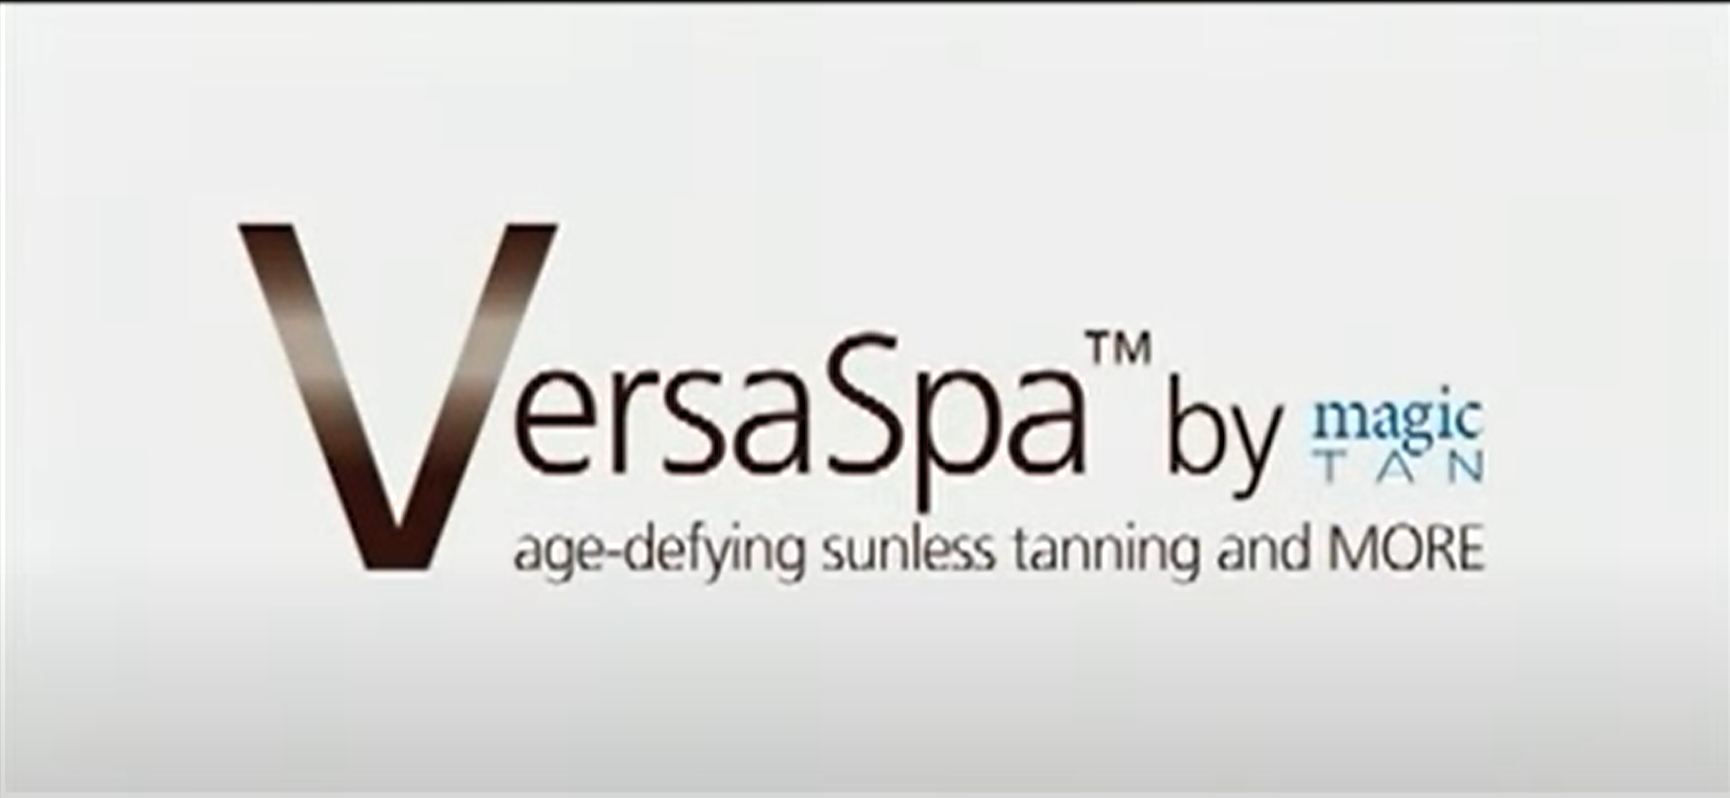 Load video: How to VersaSpa